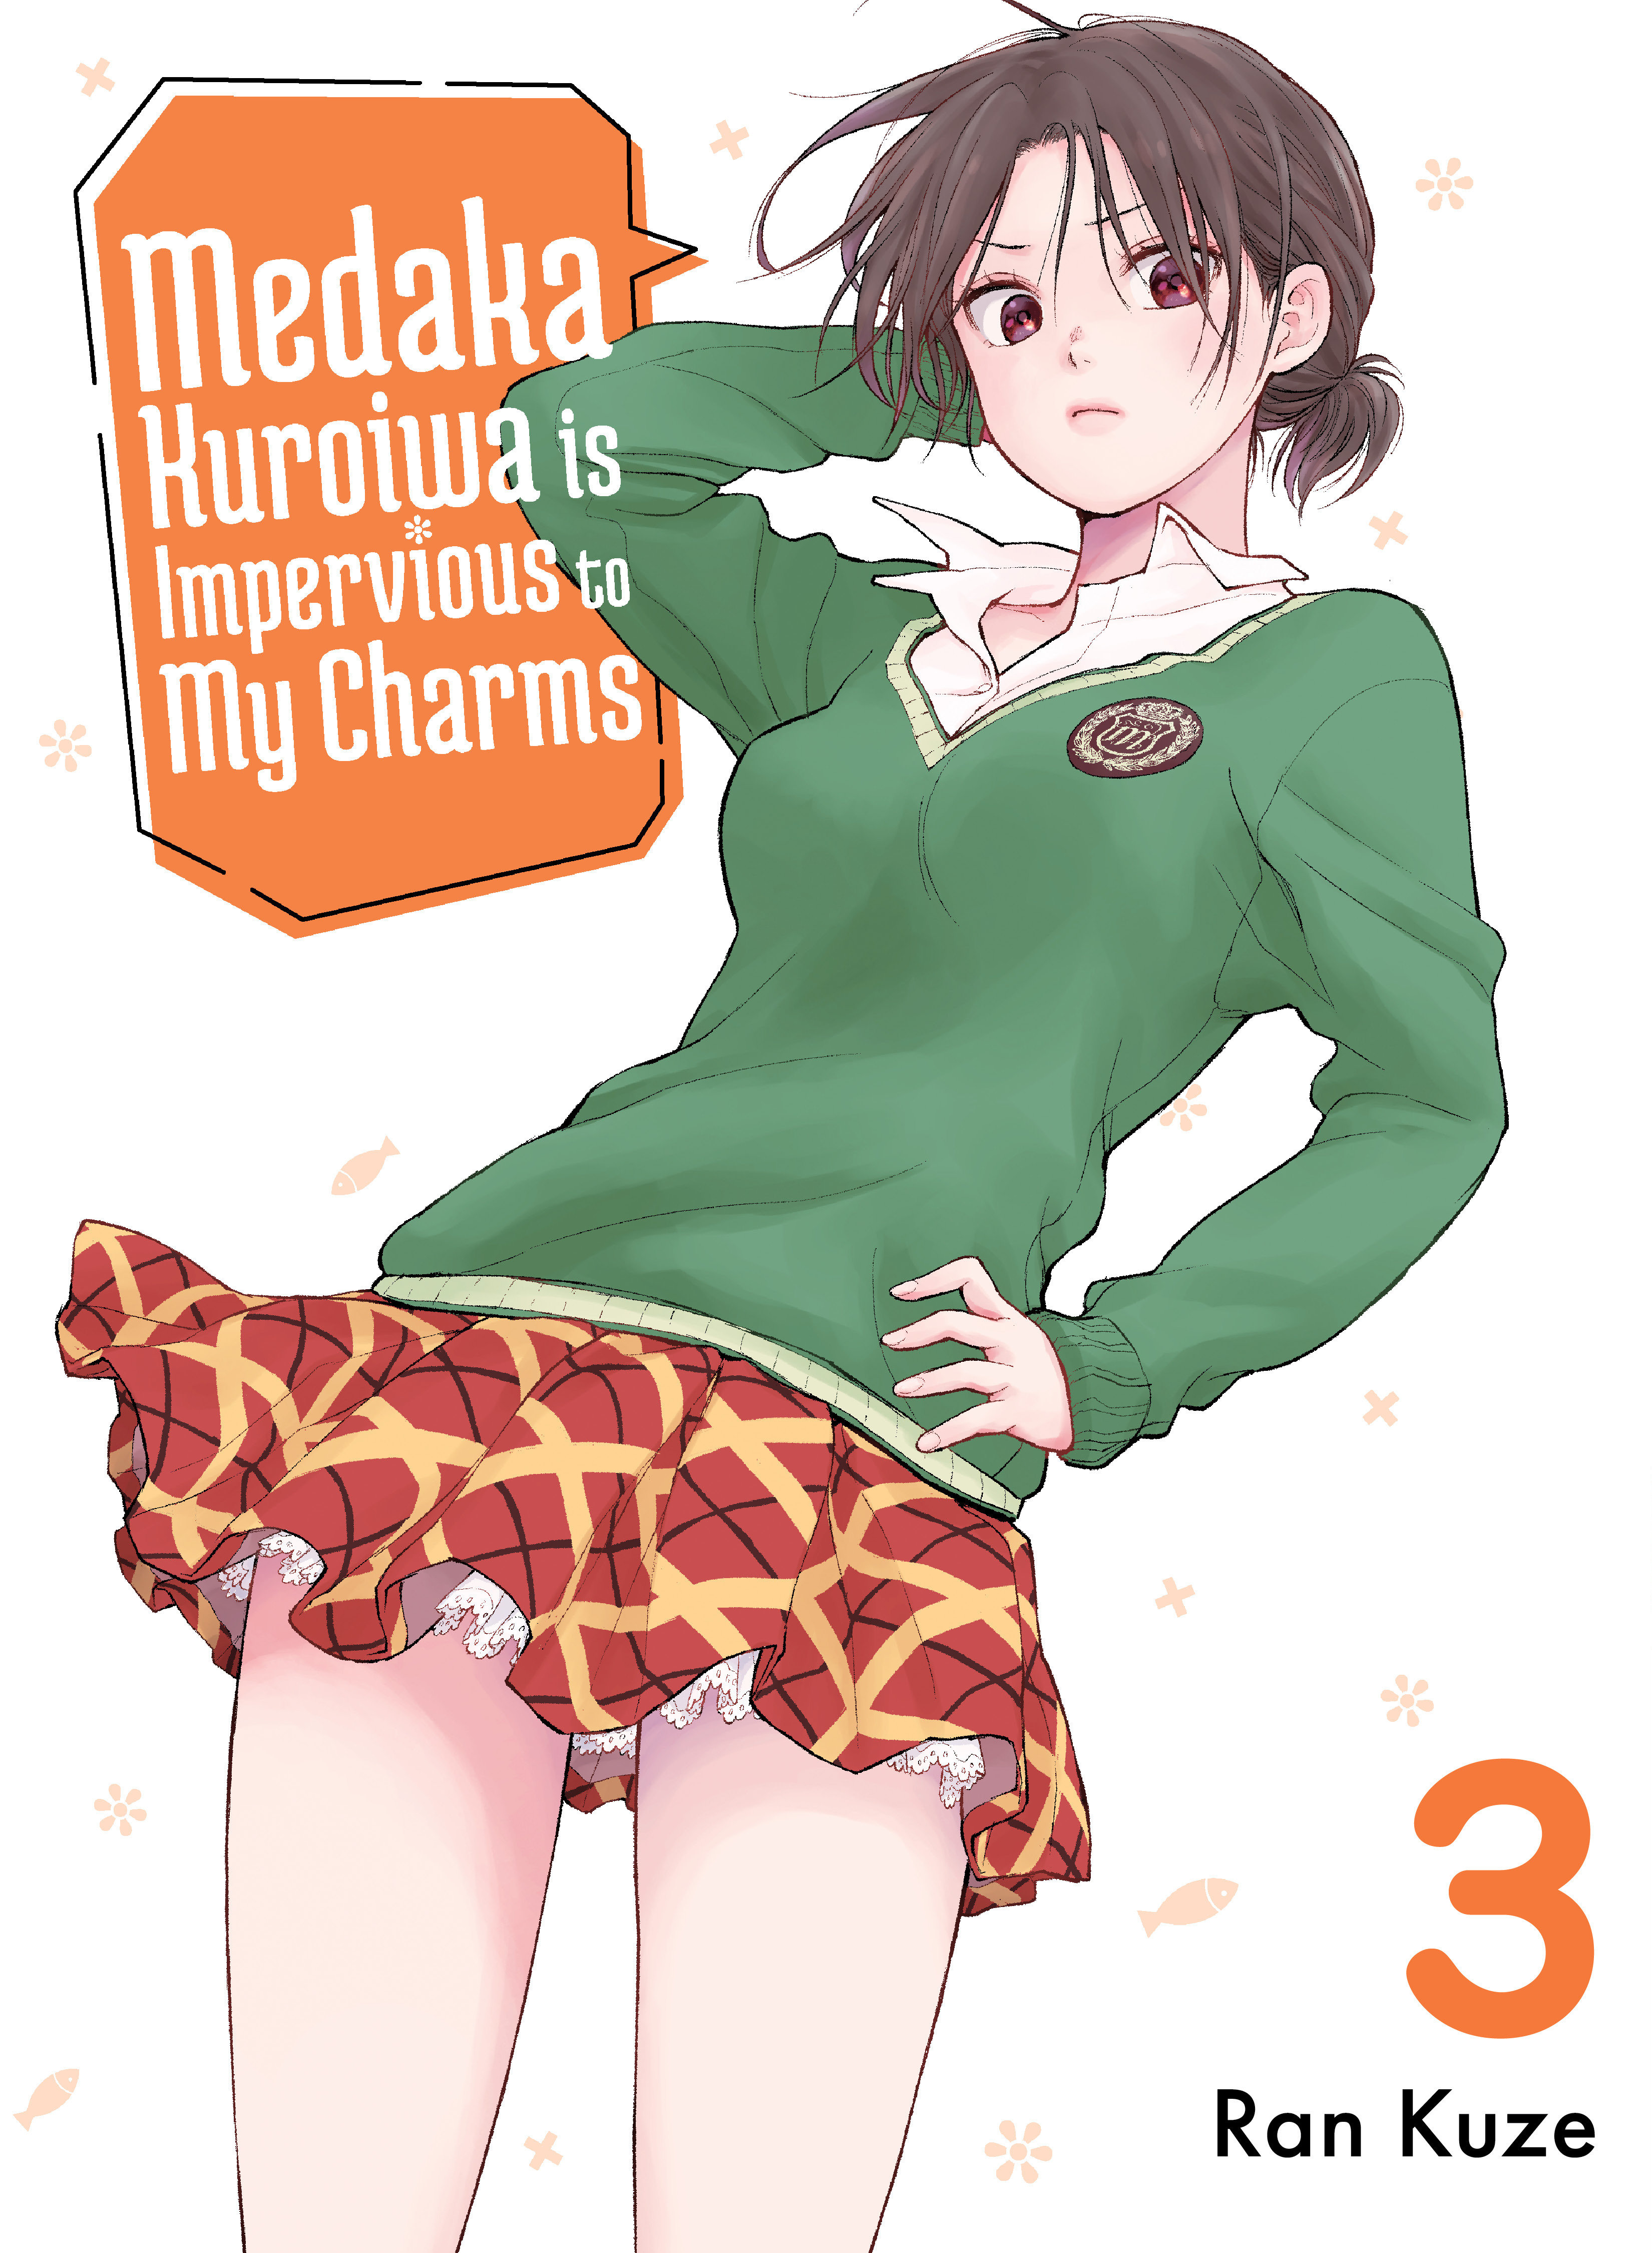 Medaka Kuroiwa is Impervious to My Charms Manga Volume 3